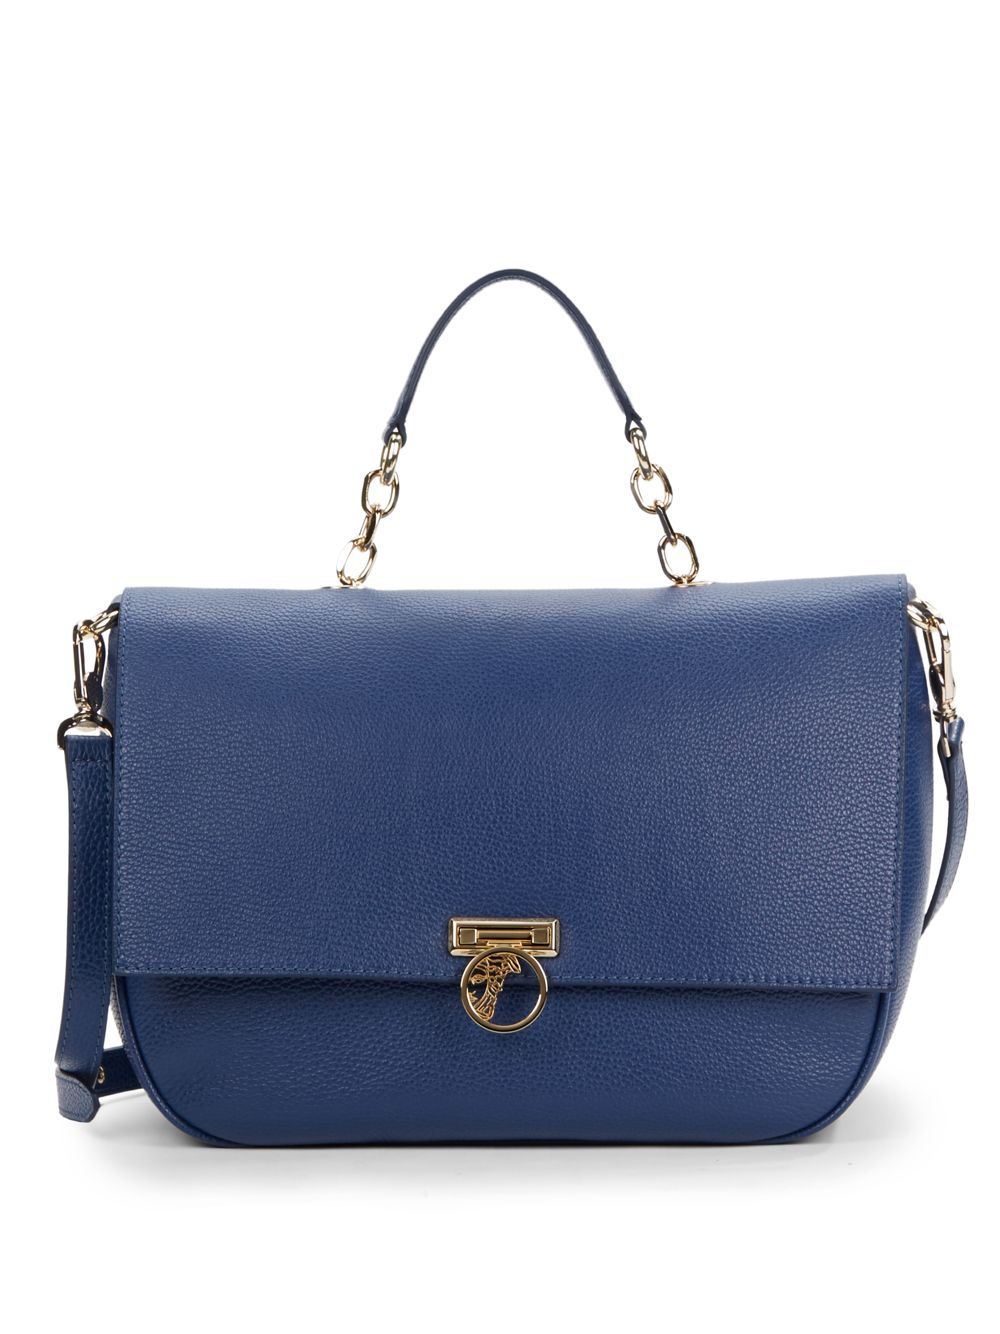 Versace Flap-Front Leather Shoulder Bag in Blue | Lyst